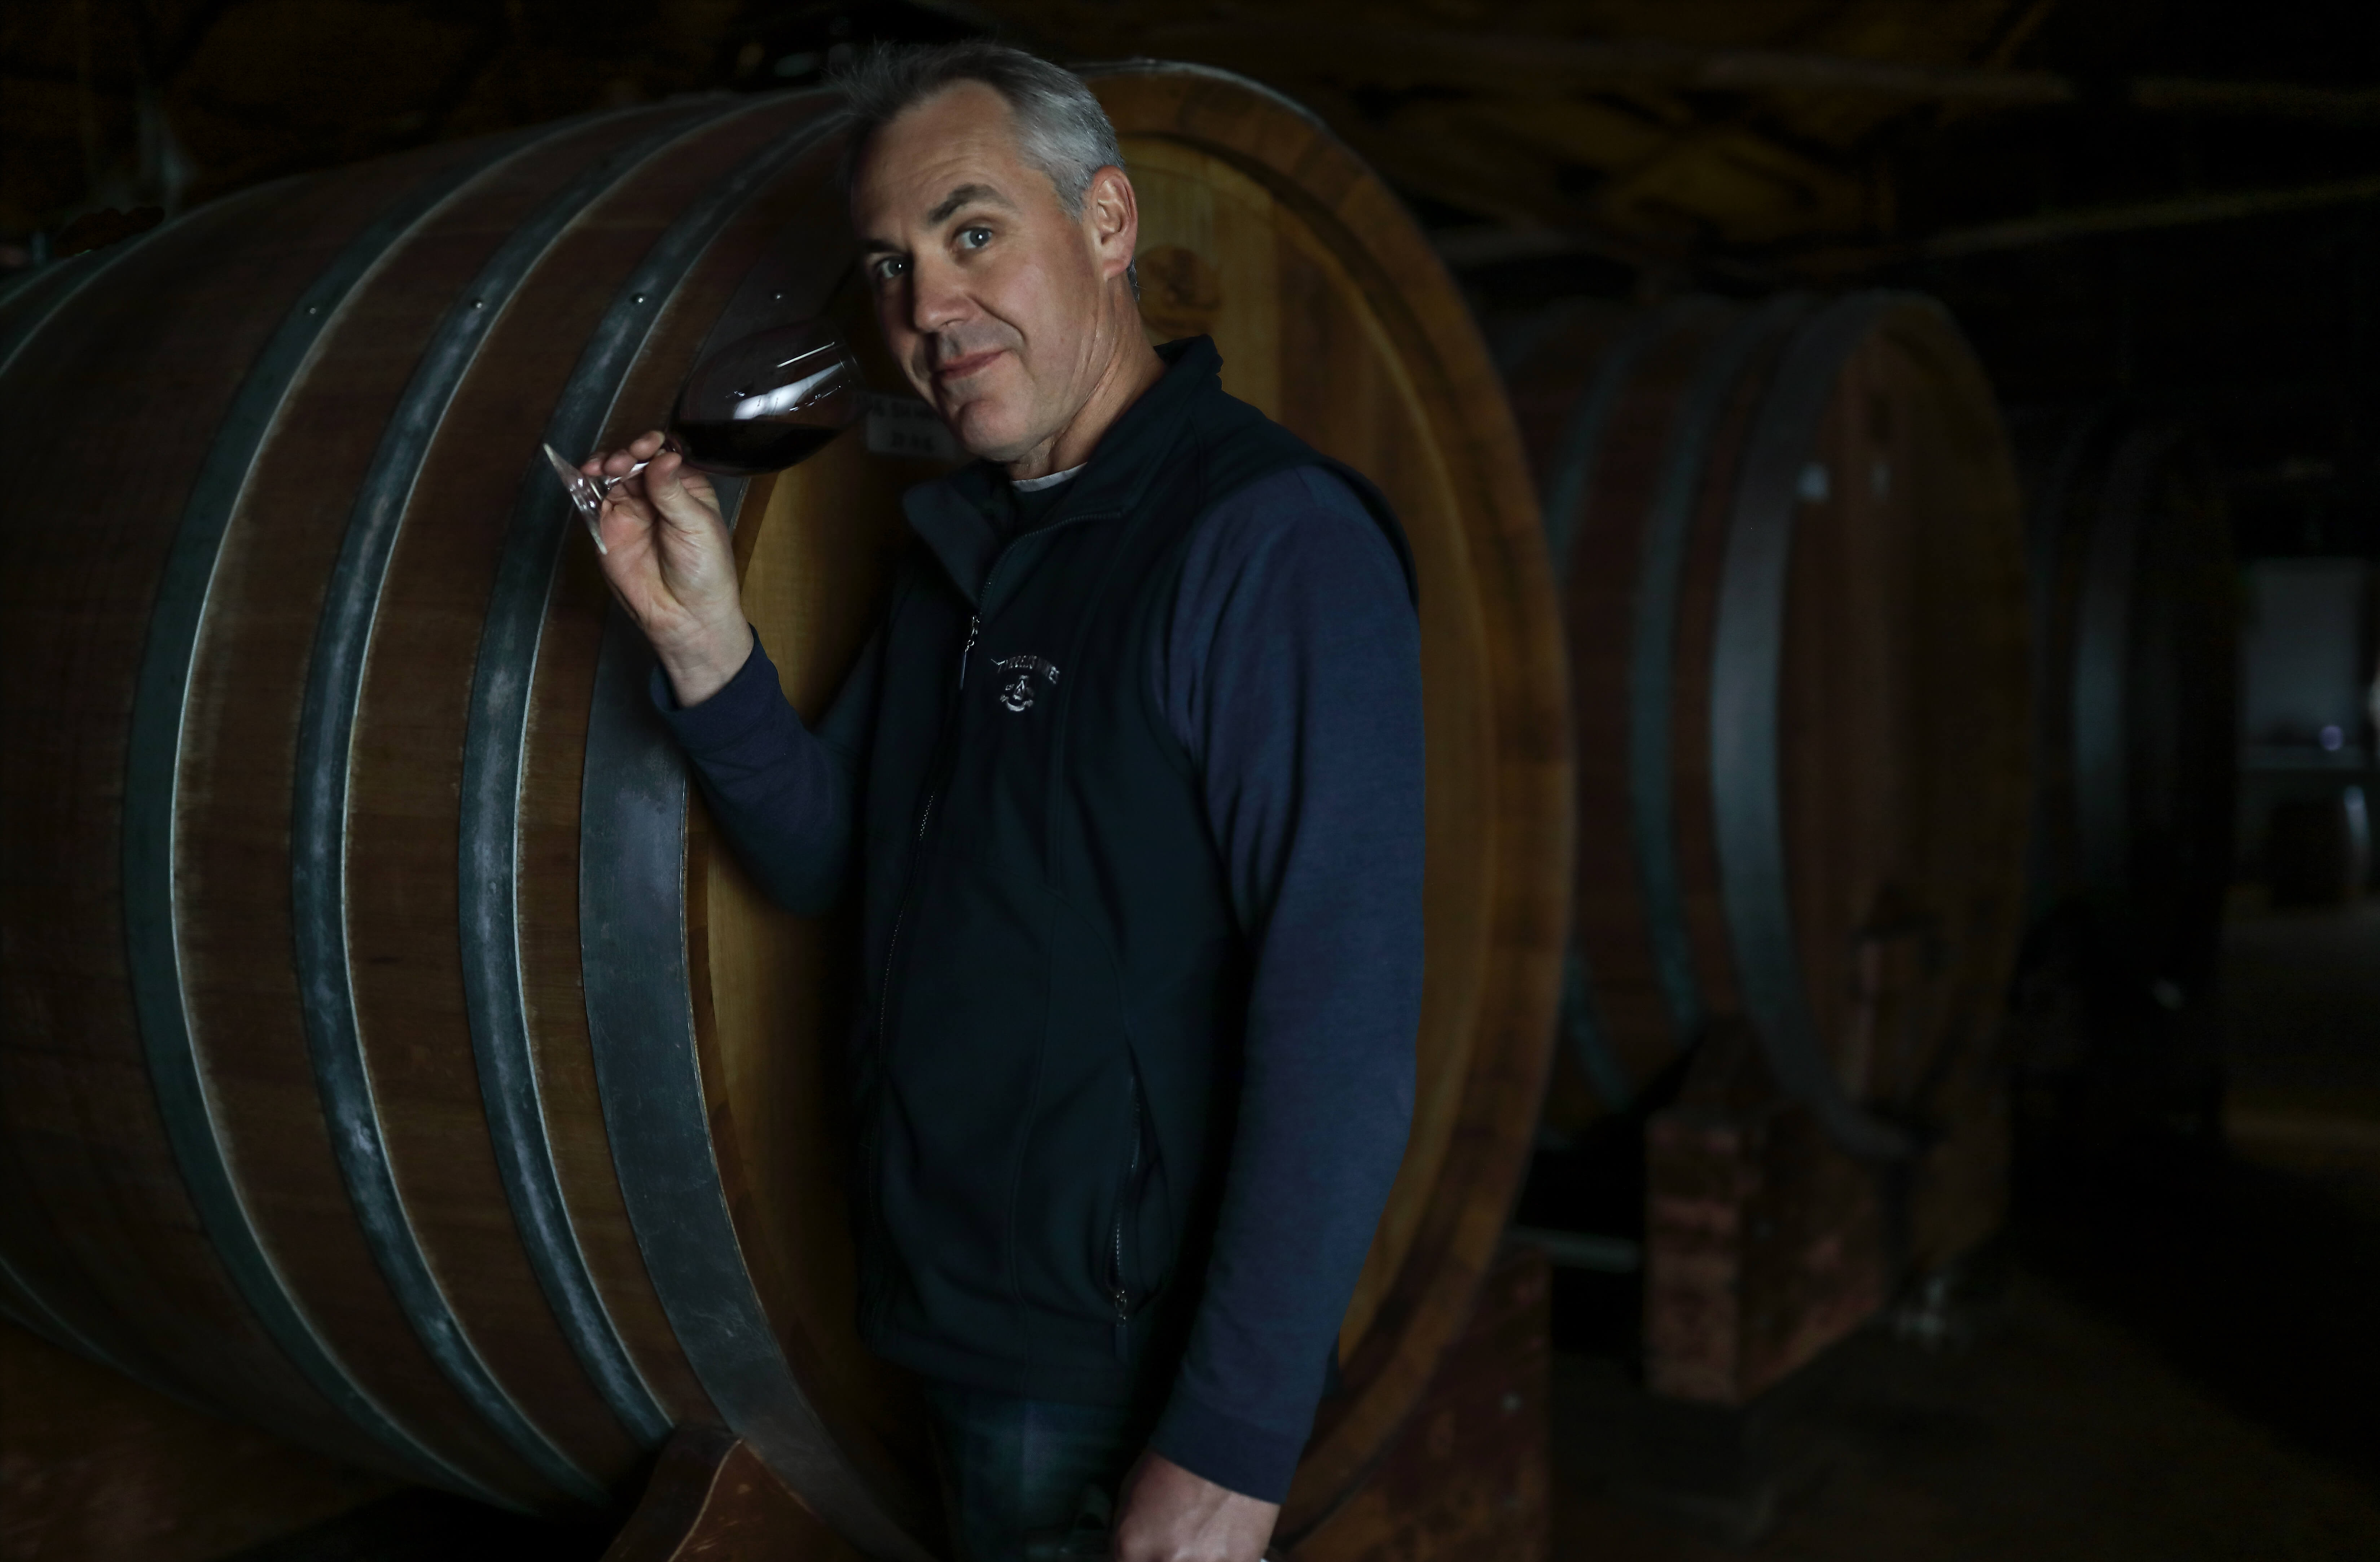 Portrait of winemaker in low light.